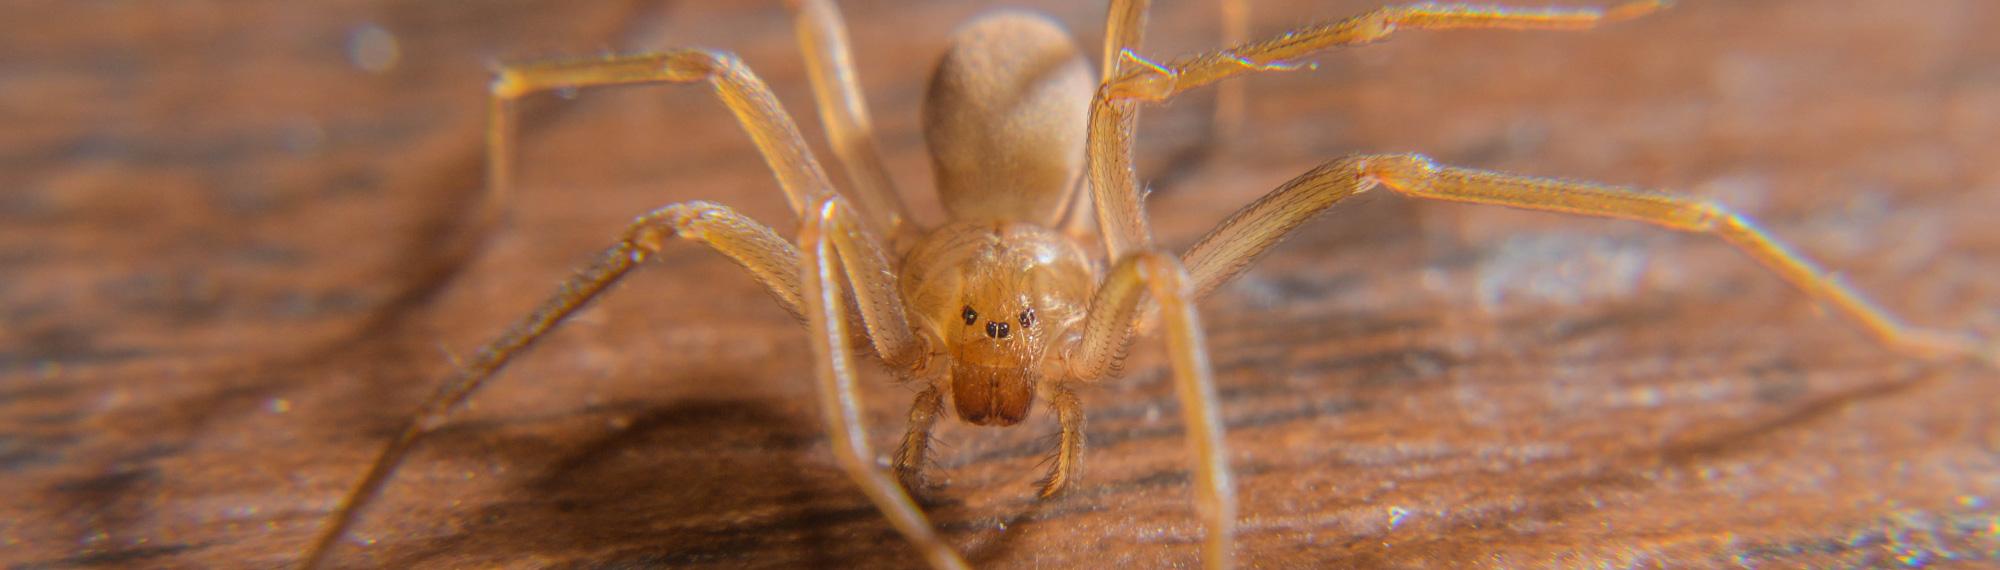 brown recluse spider crawling across wood floor